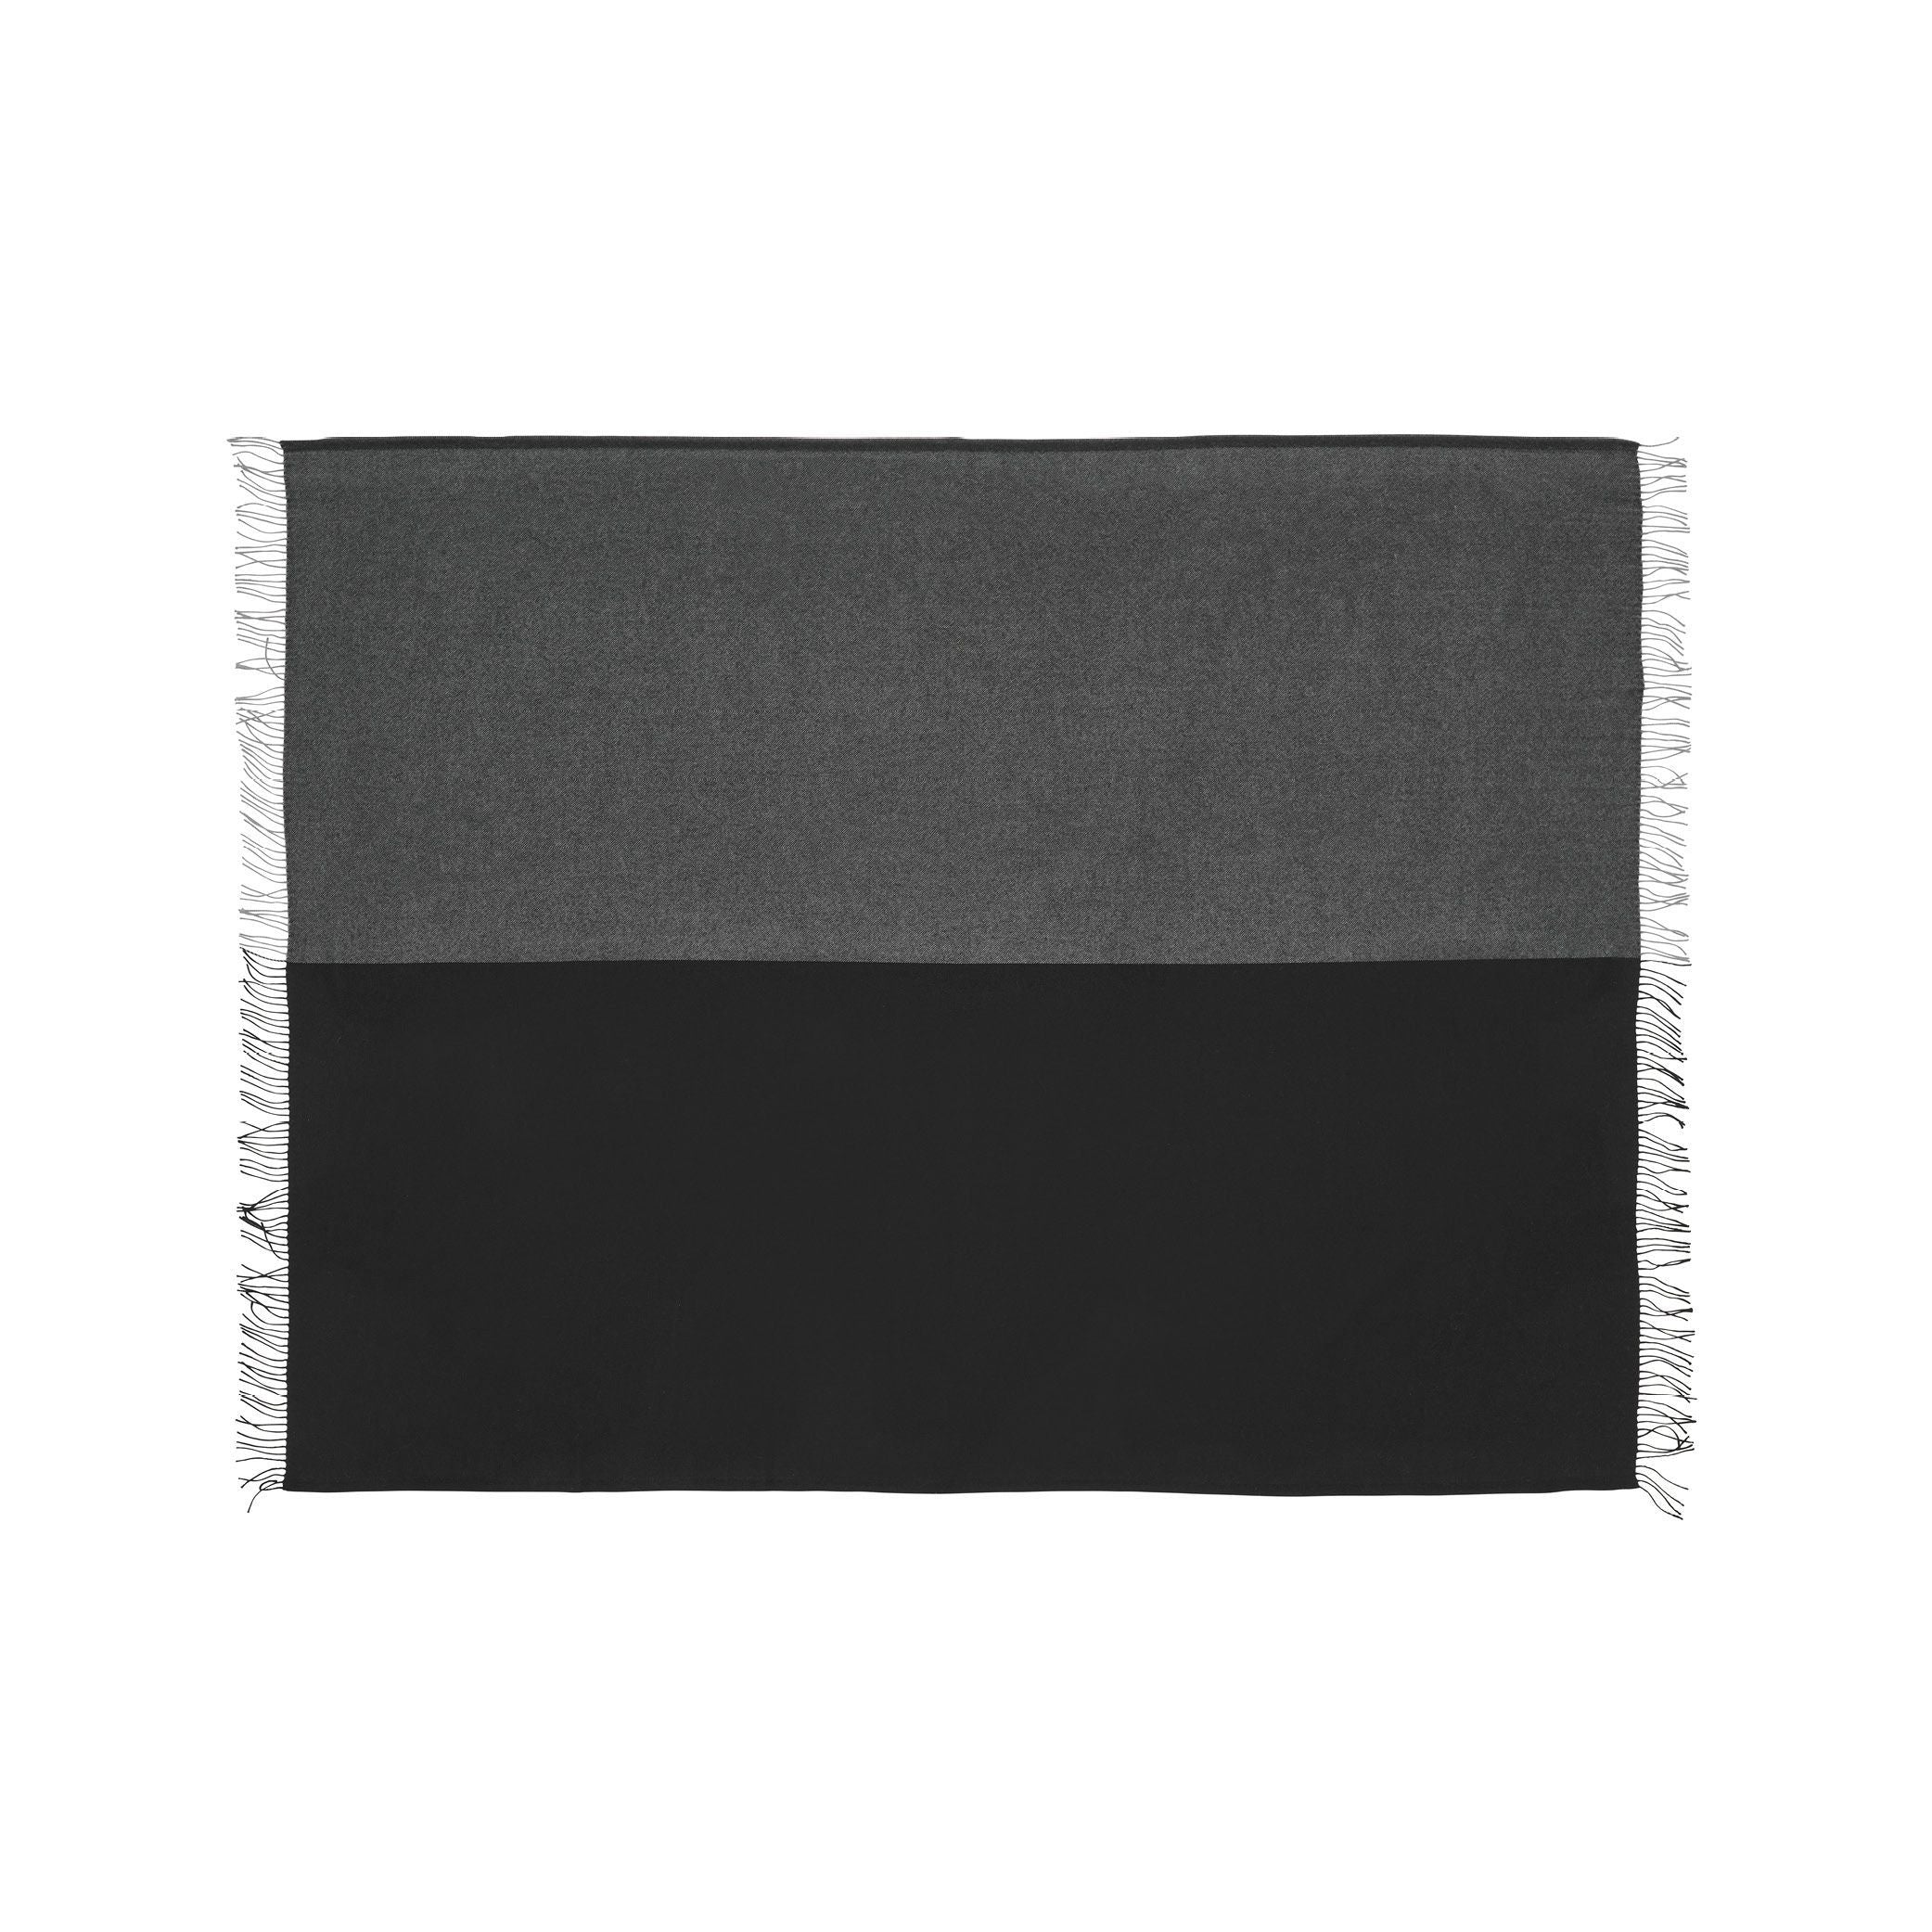 Silkorg Uldspinderi Secret Throw 130x190 cm, Granit/Black